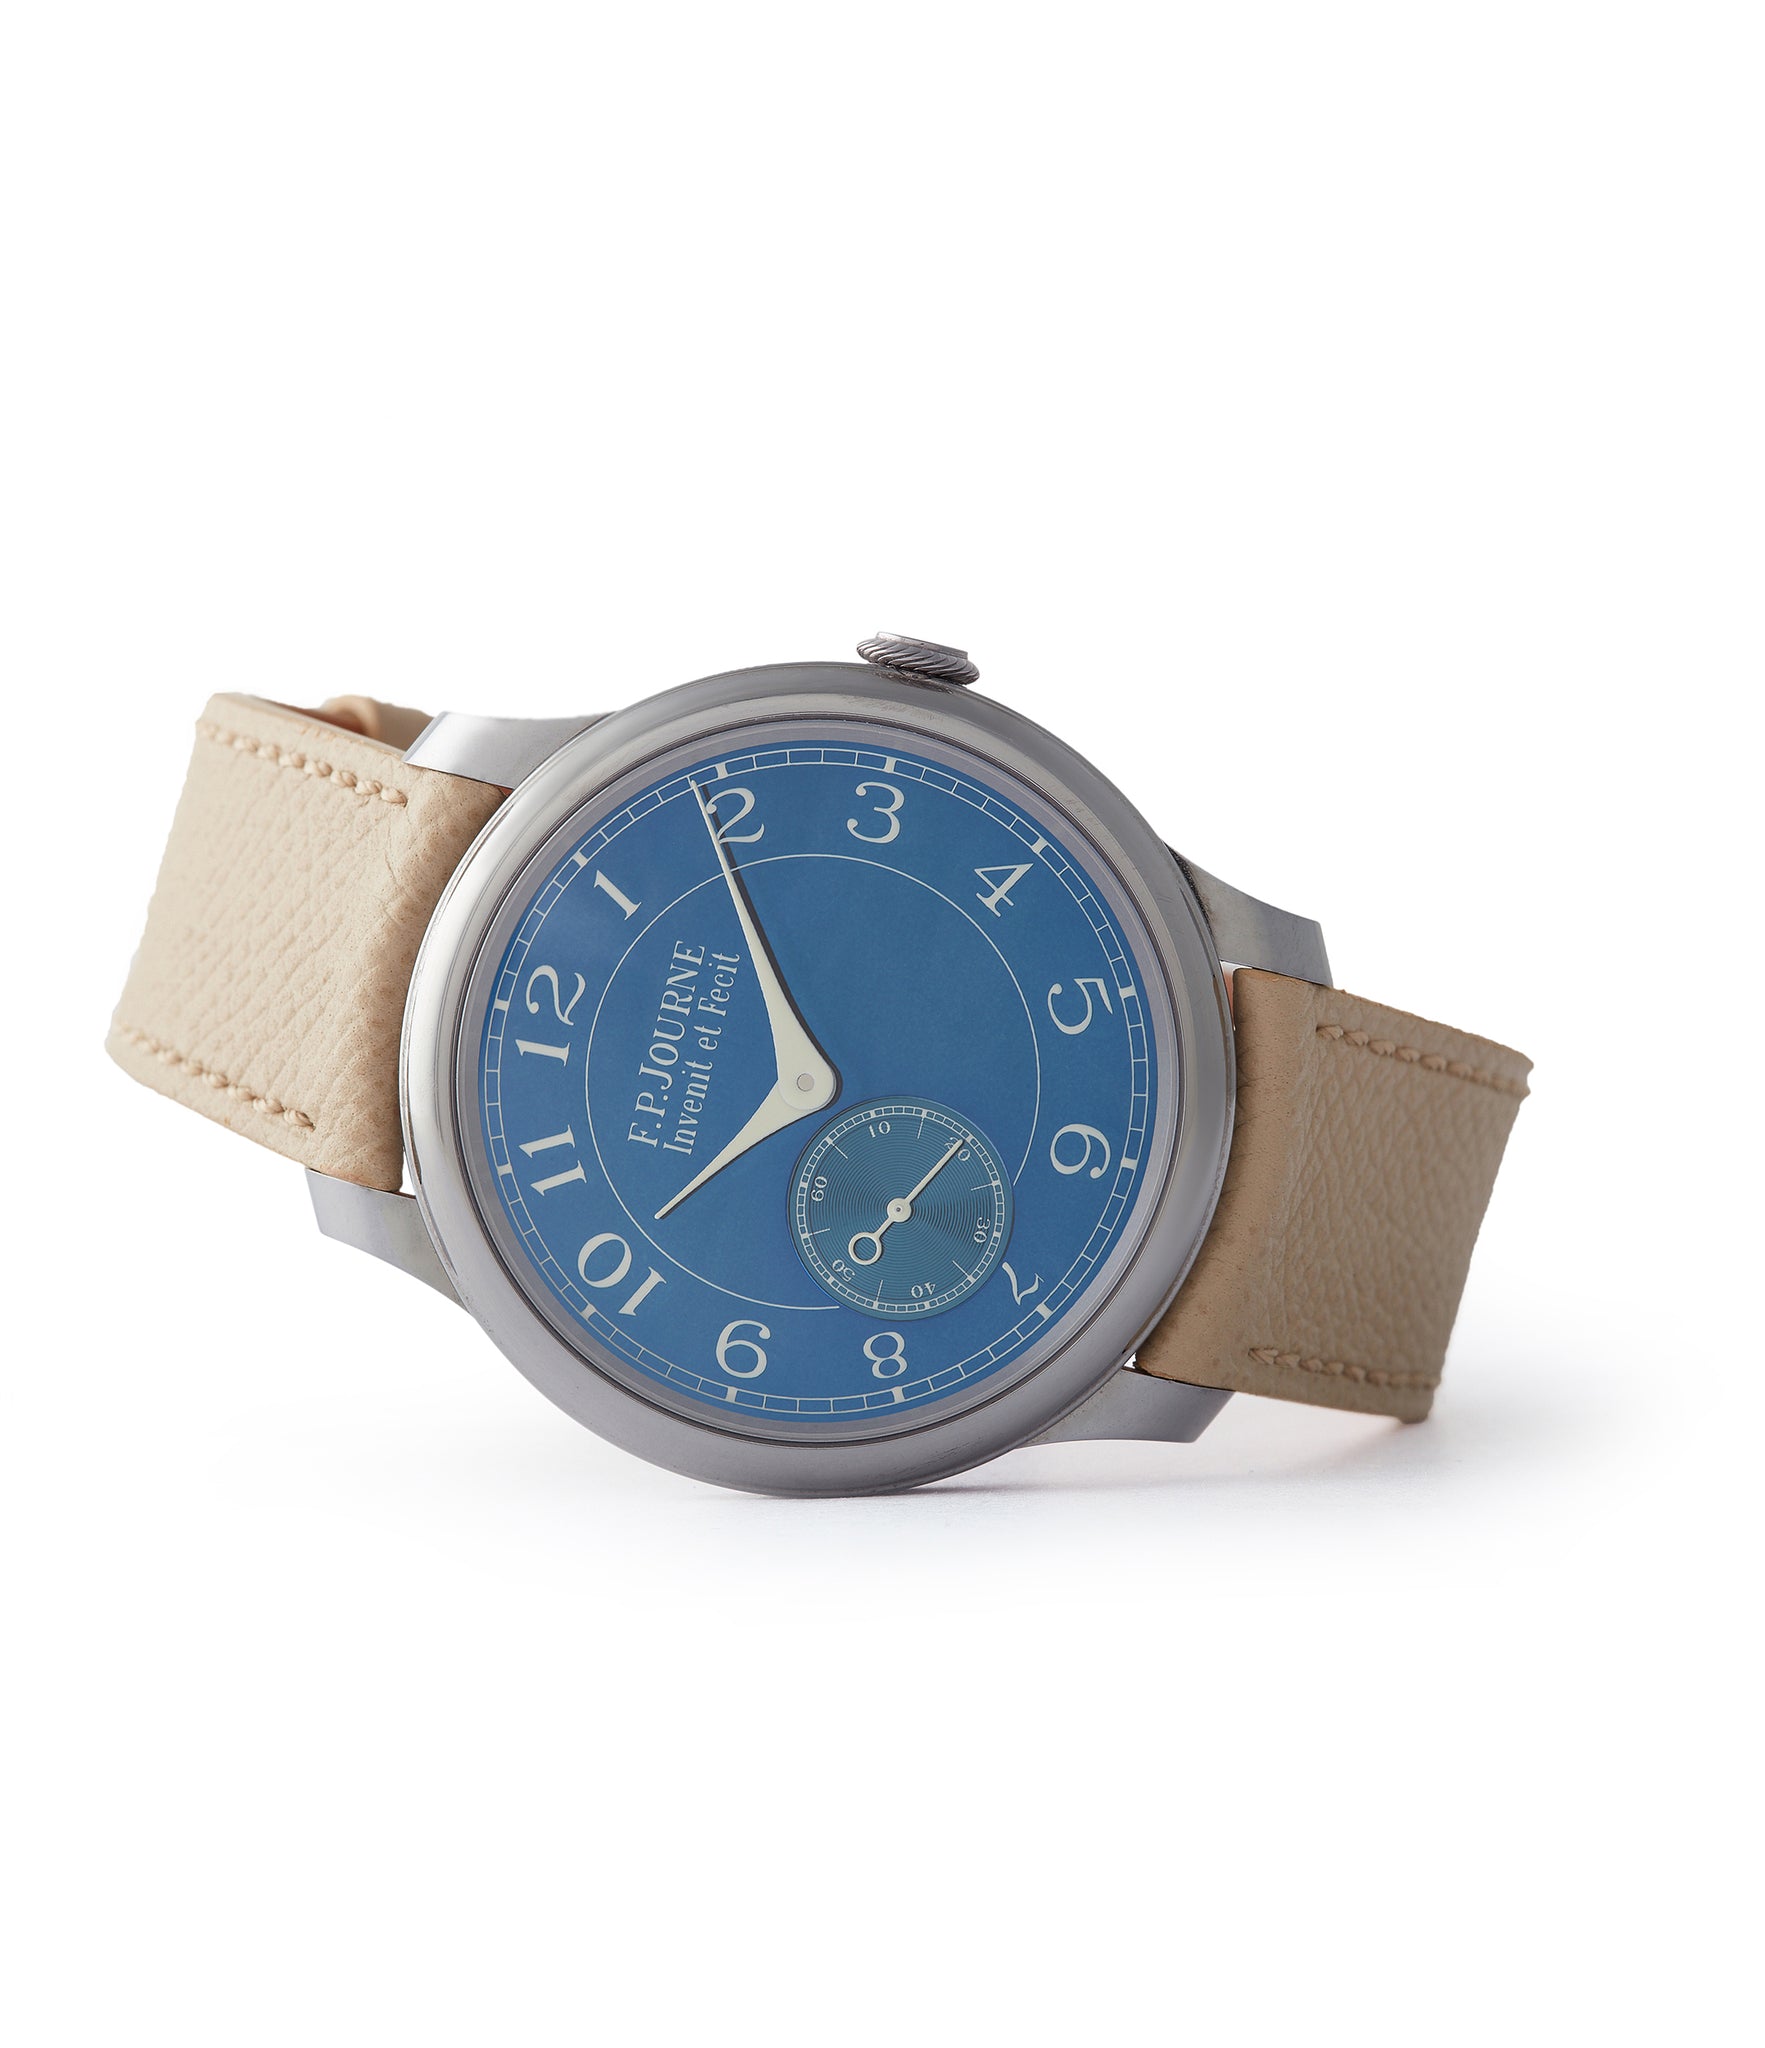 side-shot Chronometre Bleu F. P. Journe tantalum blue dial dress watch independent watchmaker for sale online at A Collected Man London